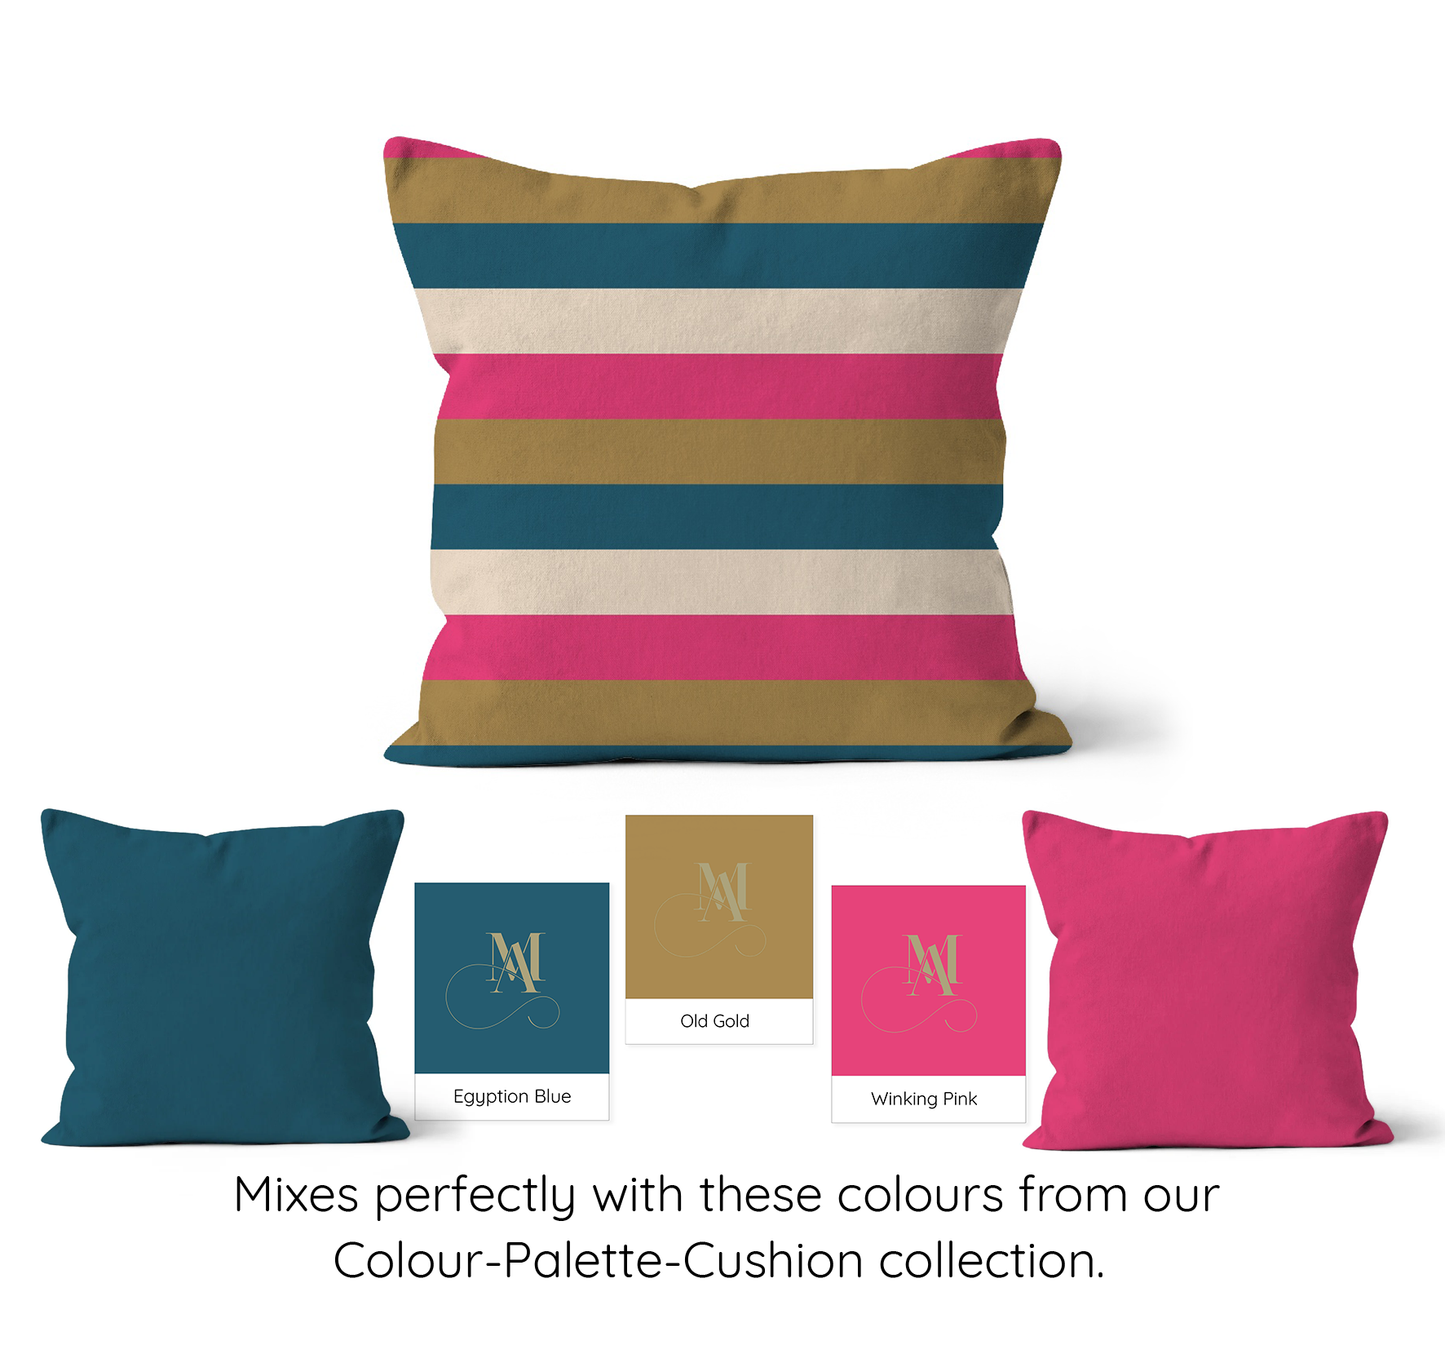 Graphic Stripes in Retro Colours, Organic Cushion Cover